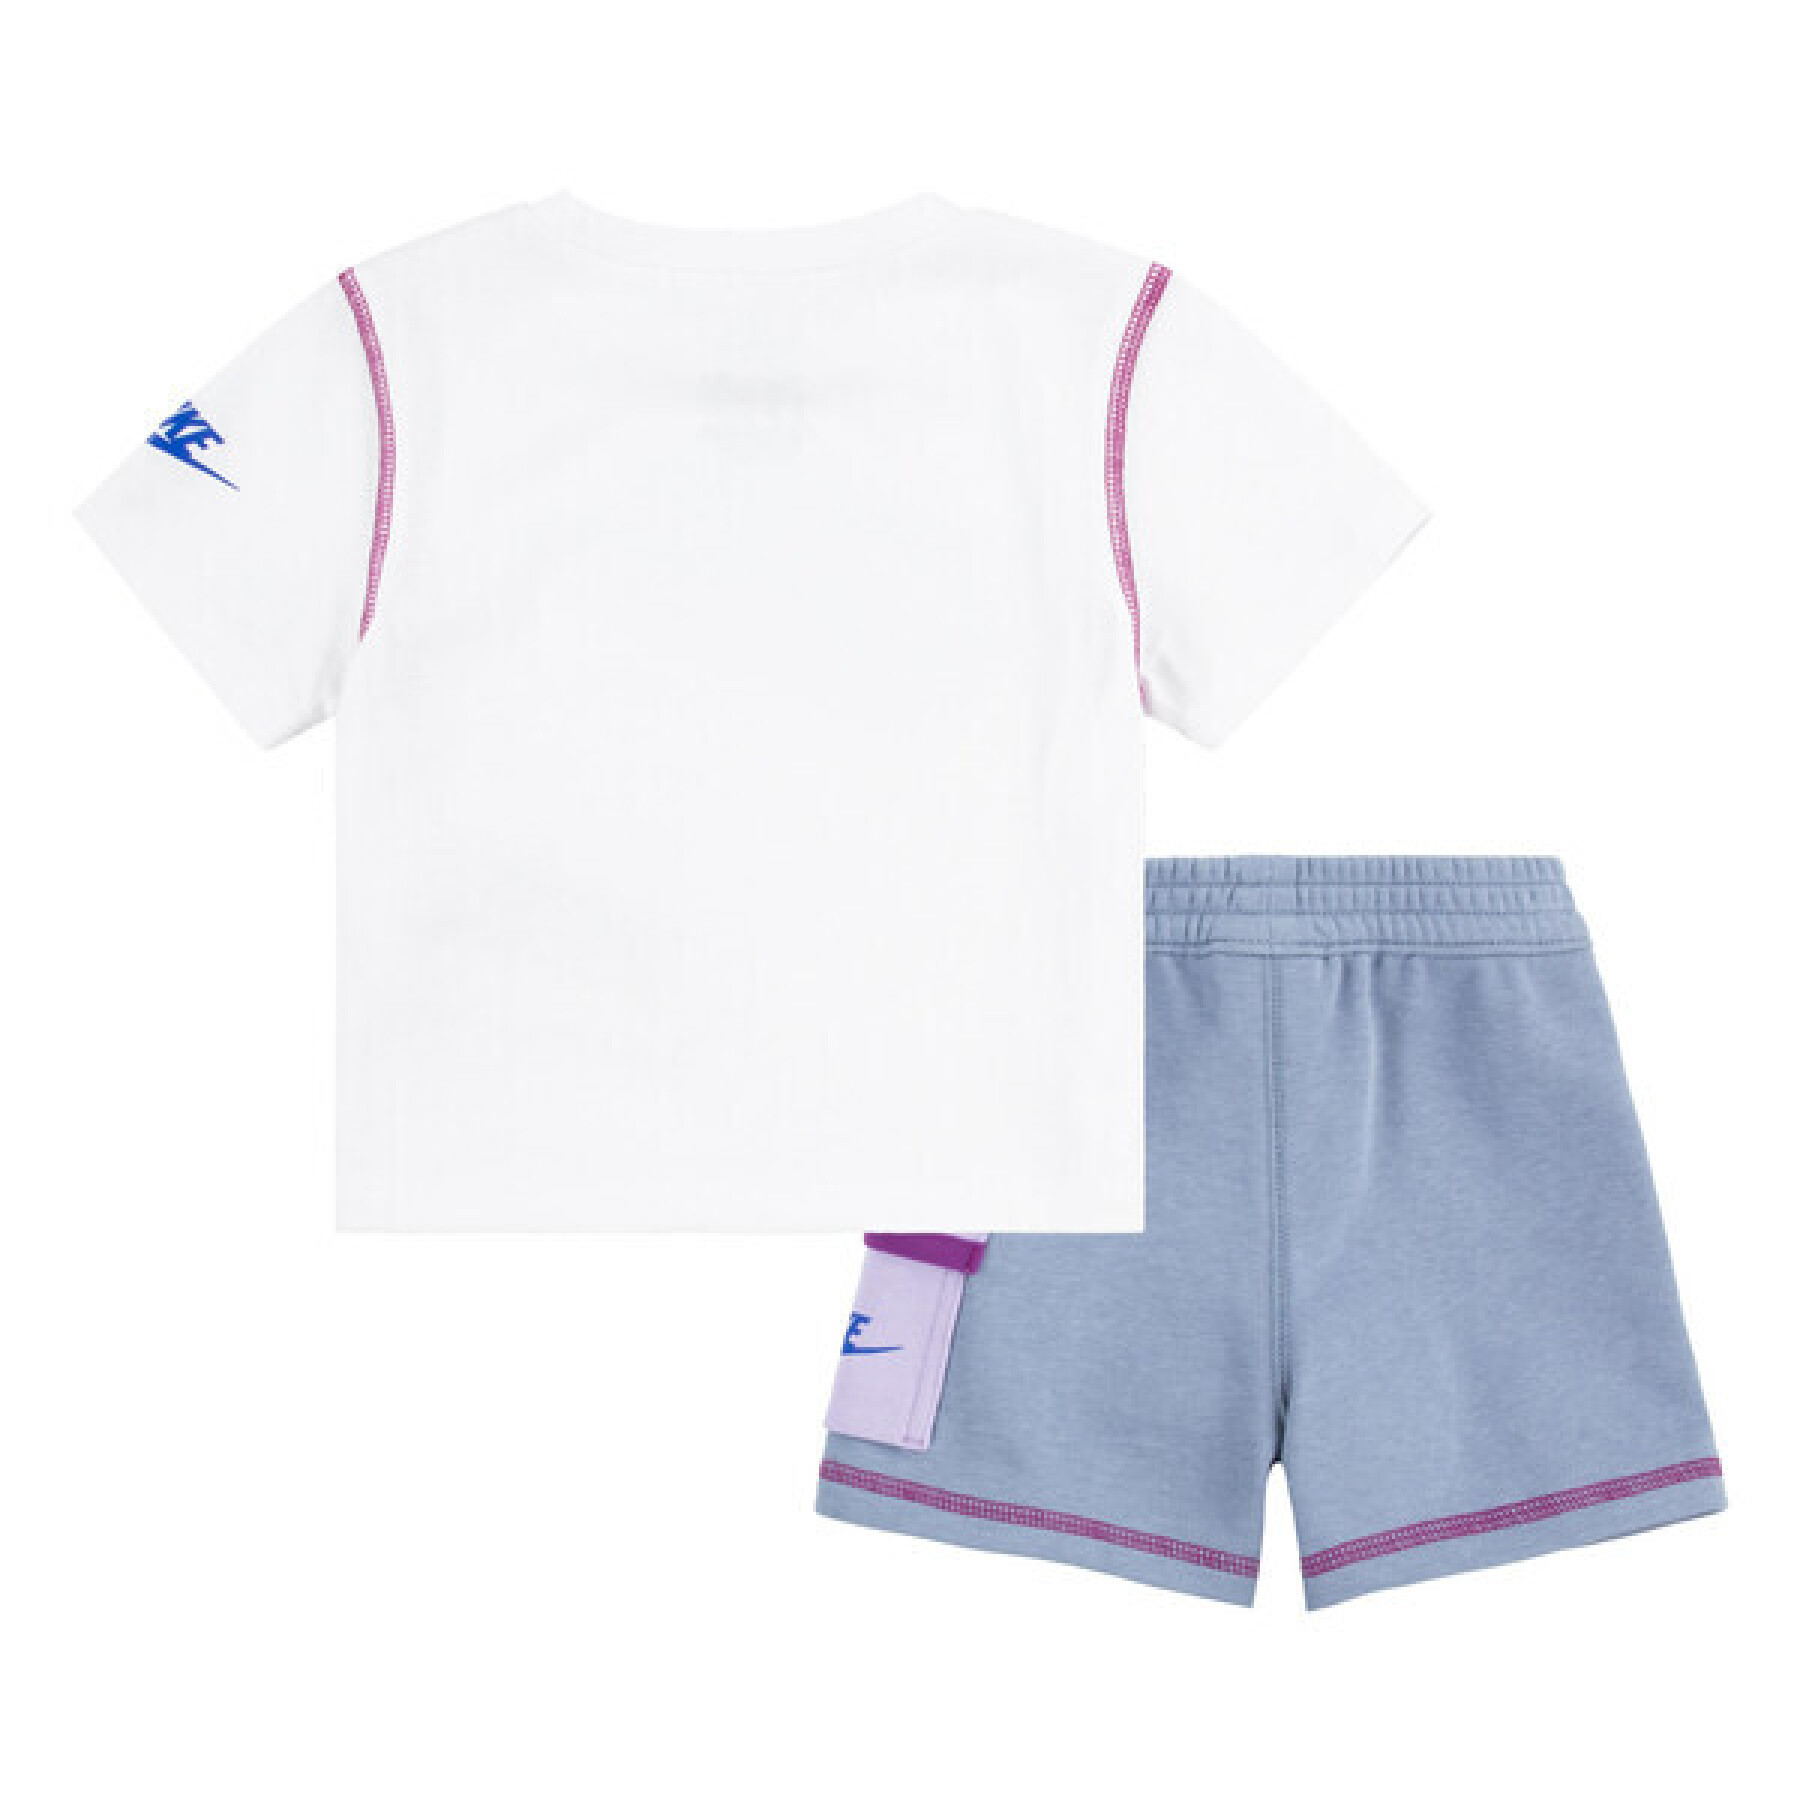 Shorts für Kinder Nike Reimagine FT